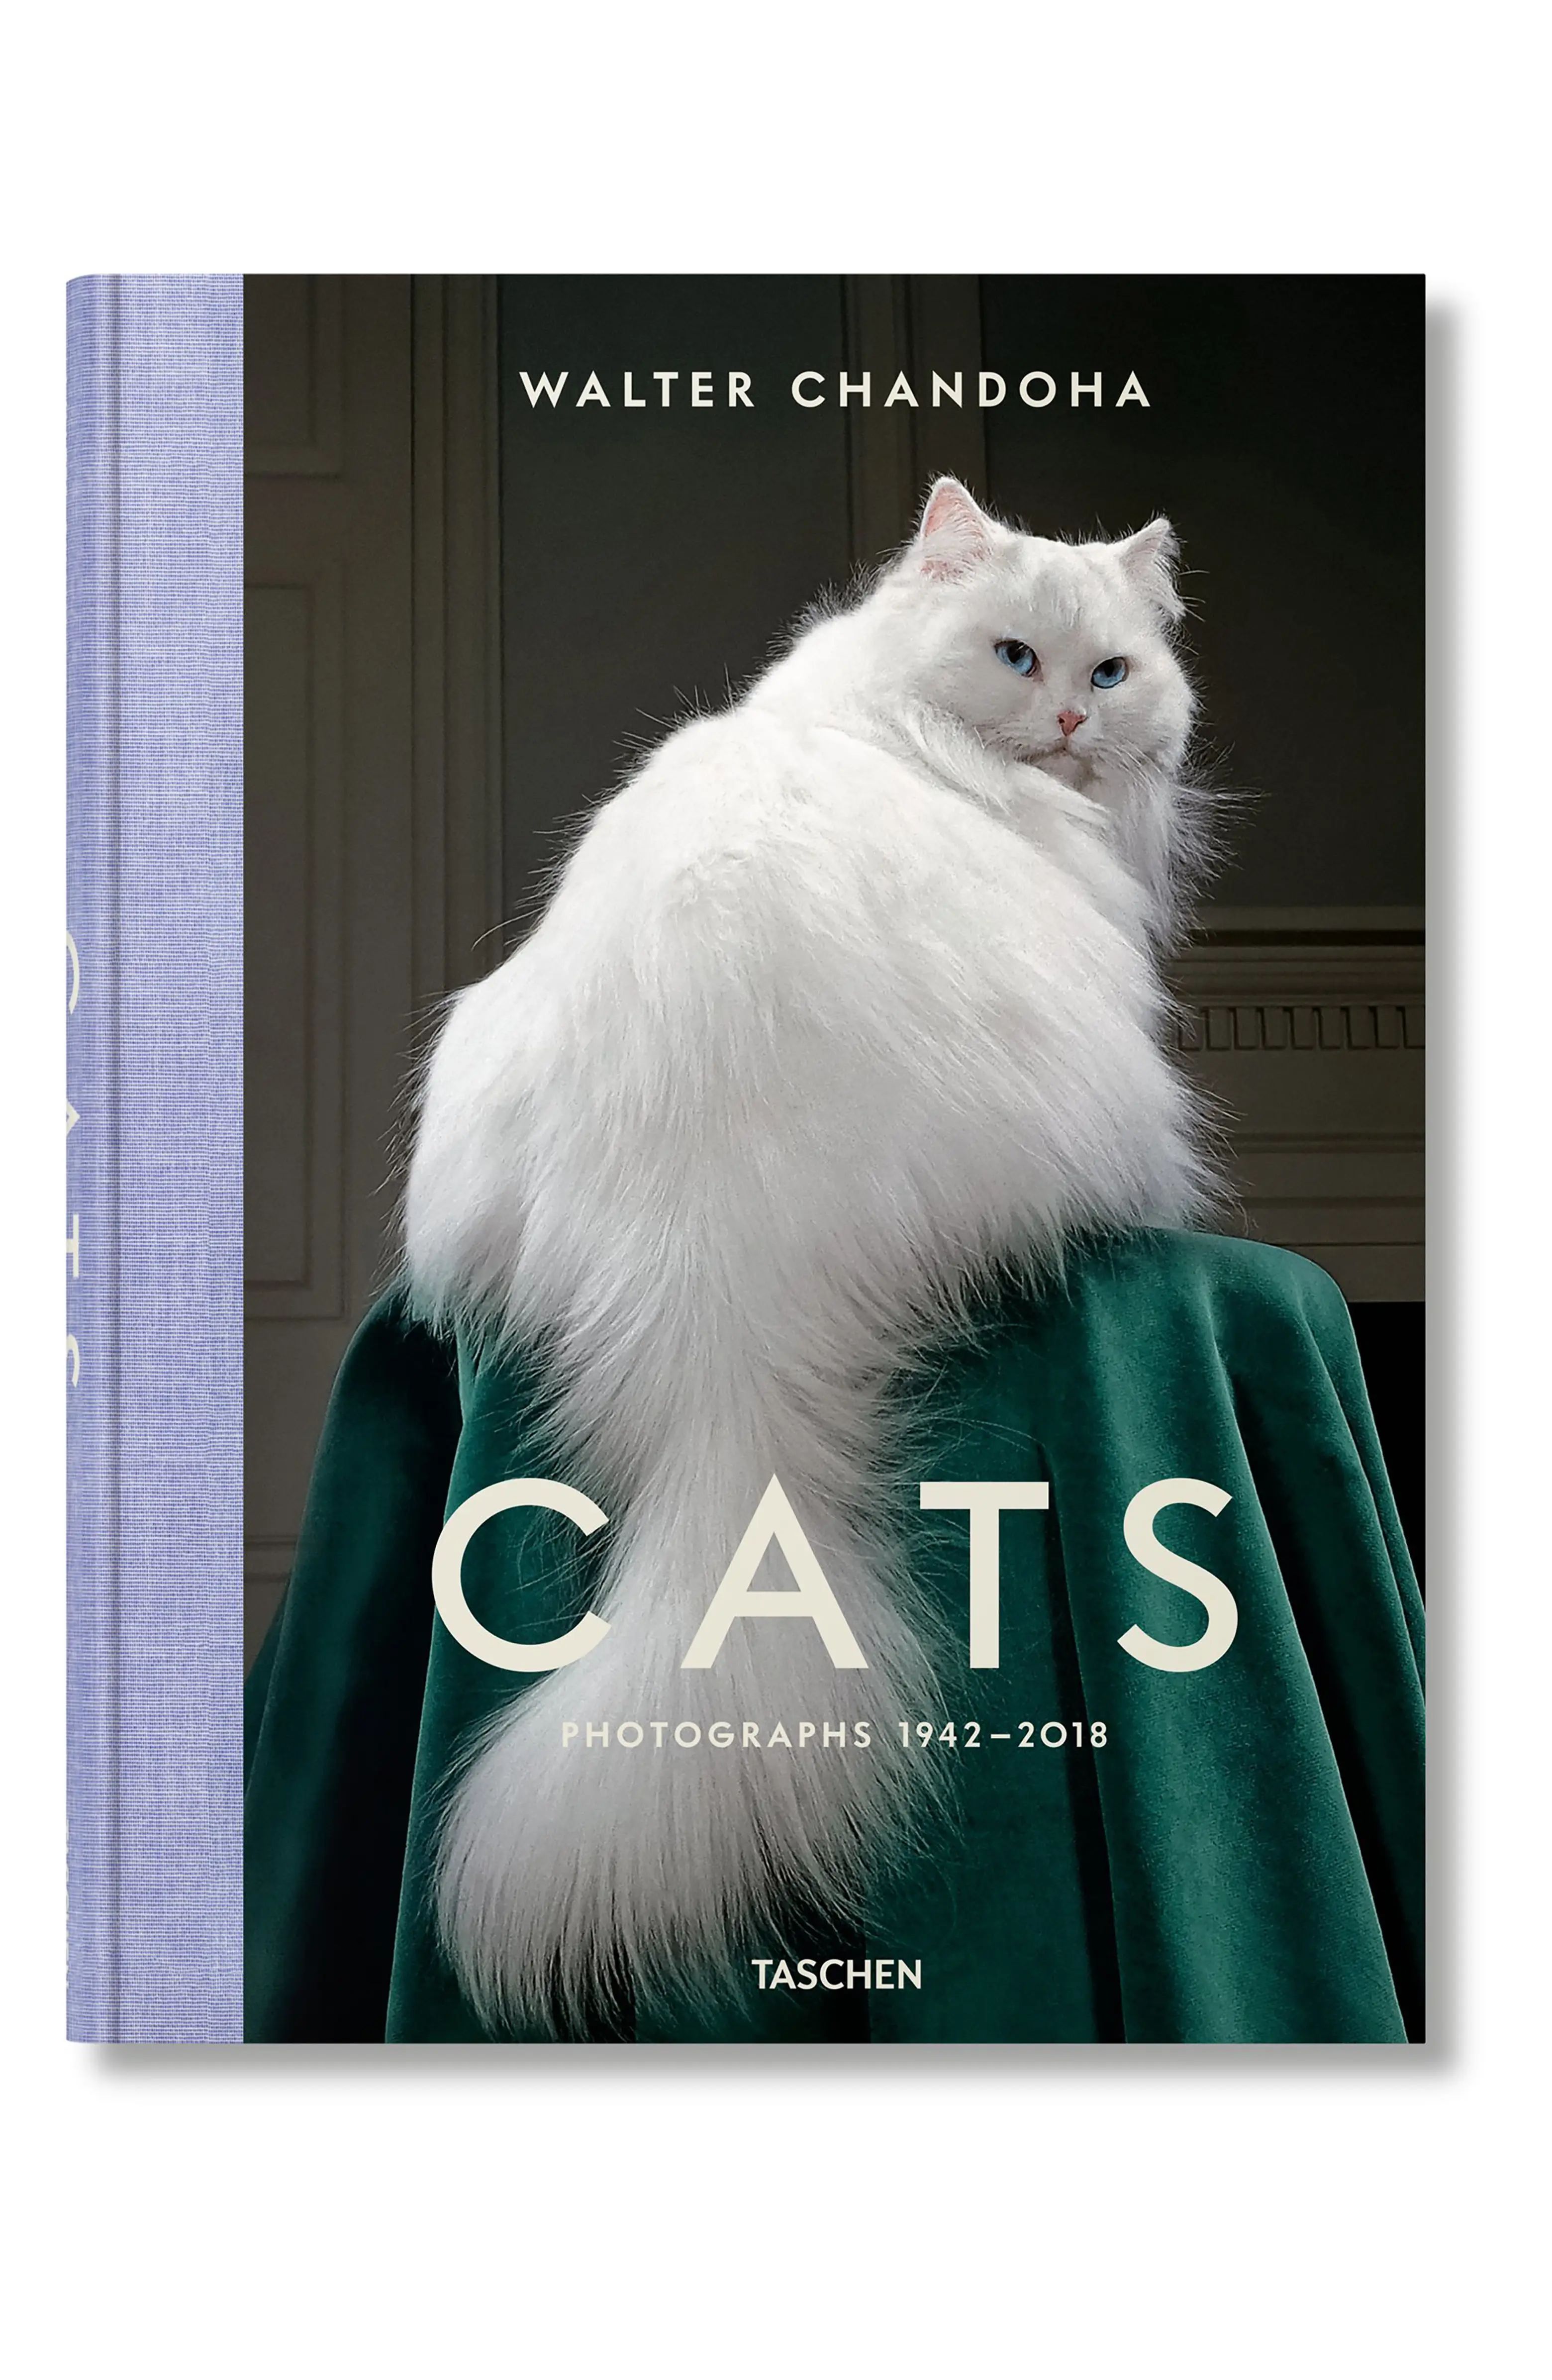 'Walter Chandoha Cats: Photographs 1942-2018' Book | Nordstrom | Nordstrom